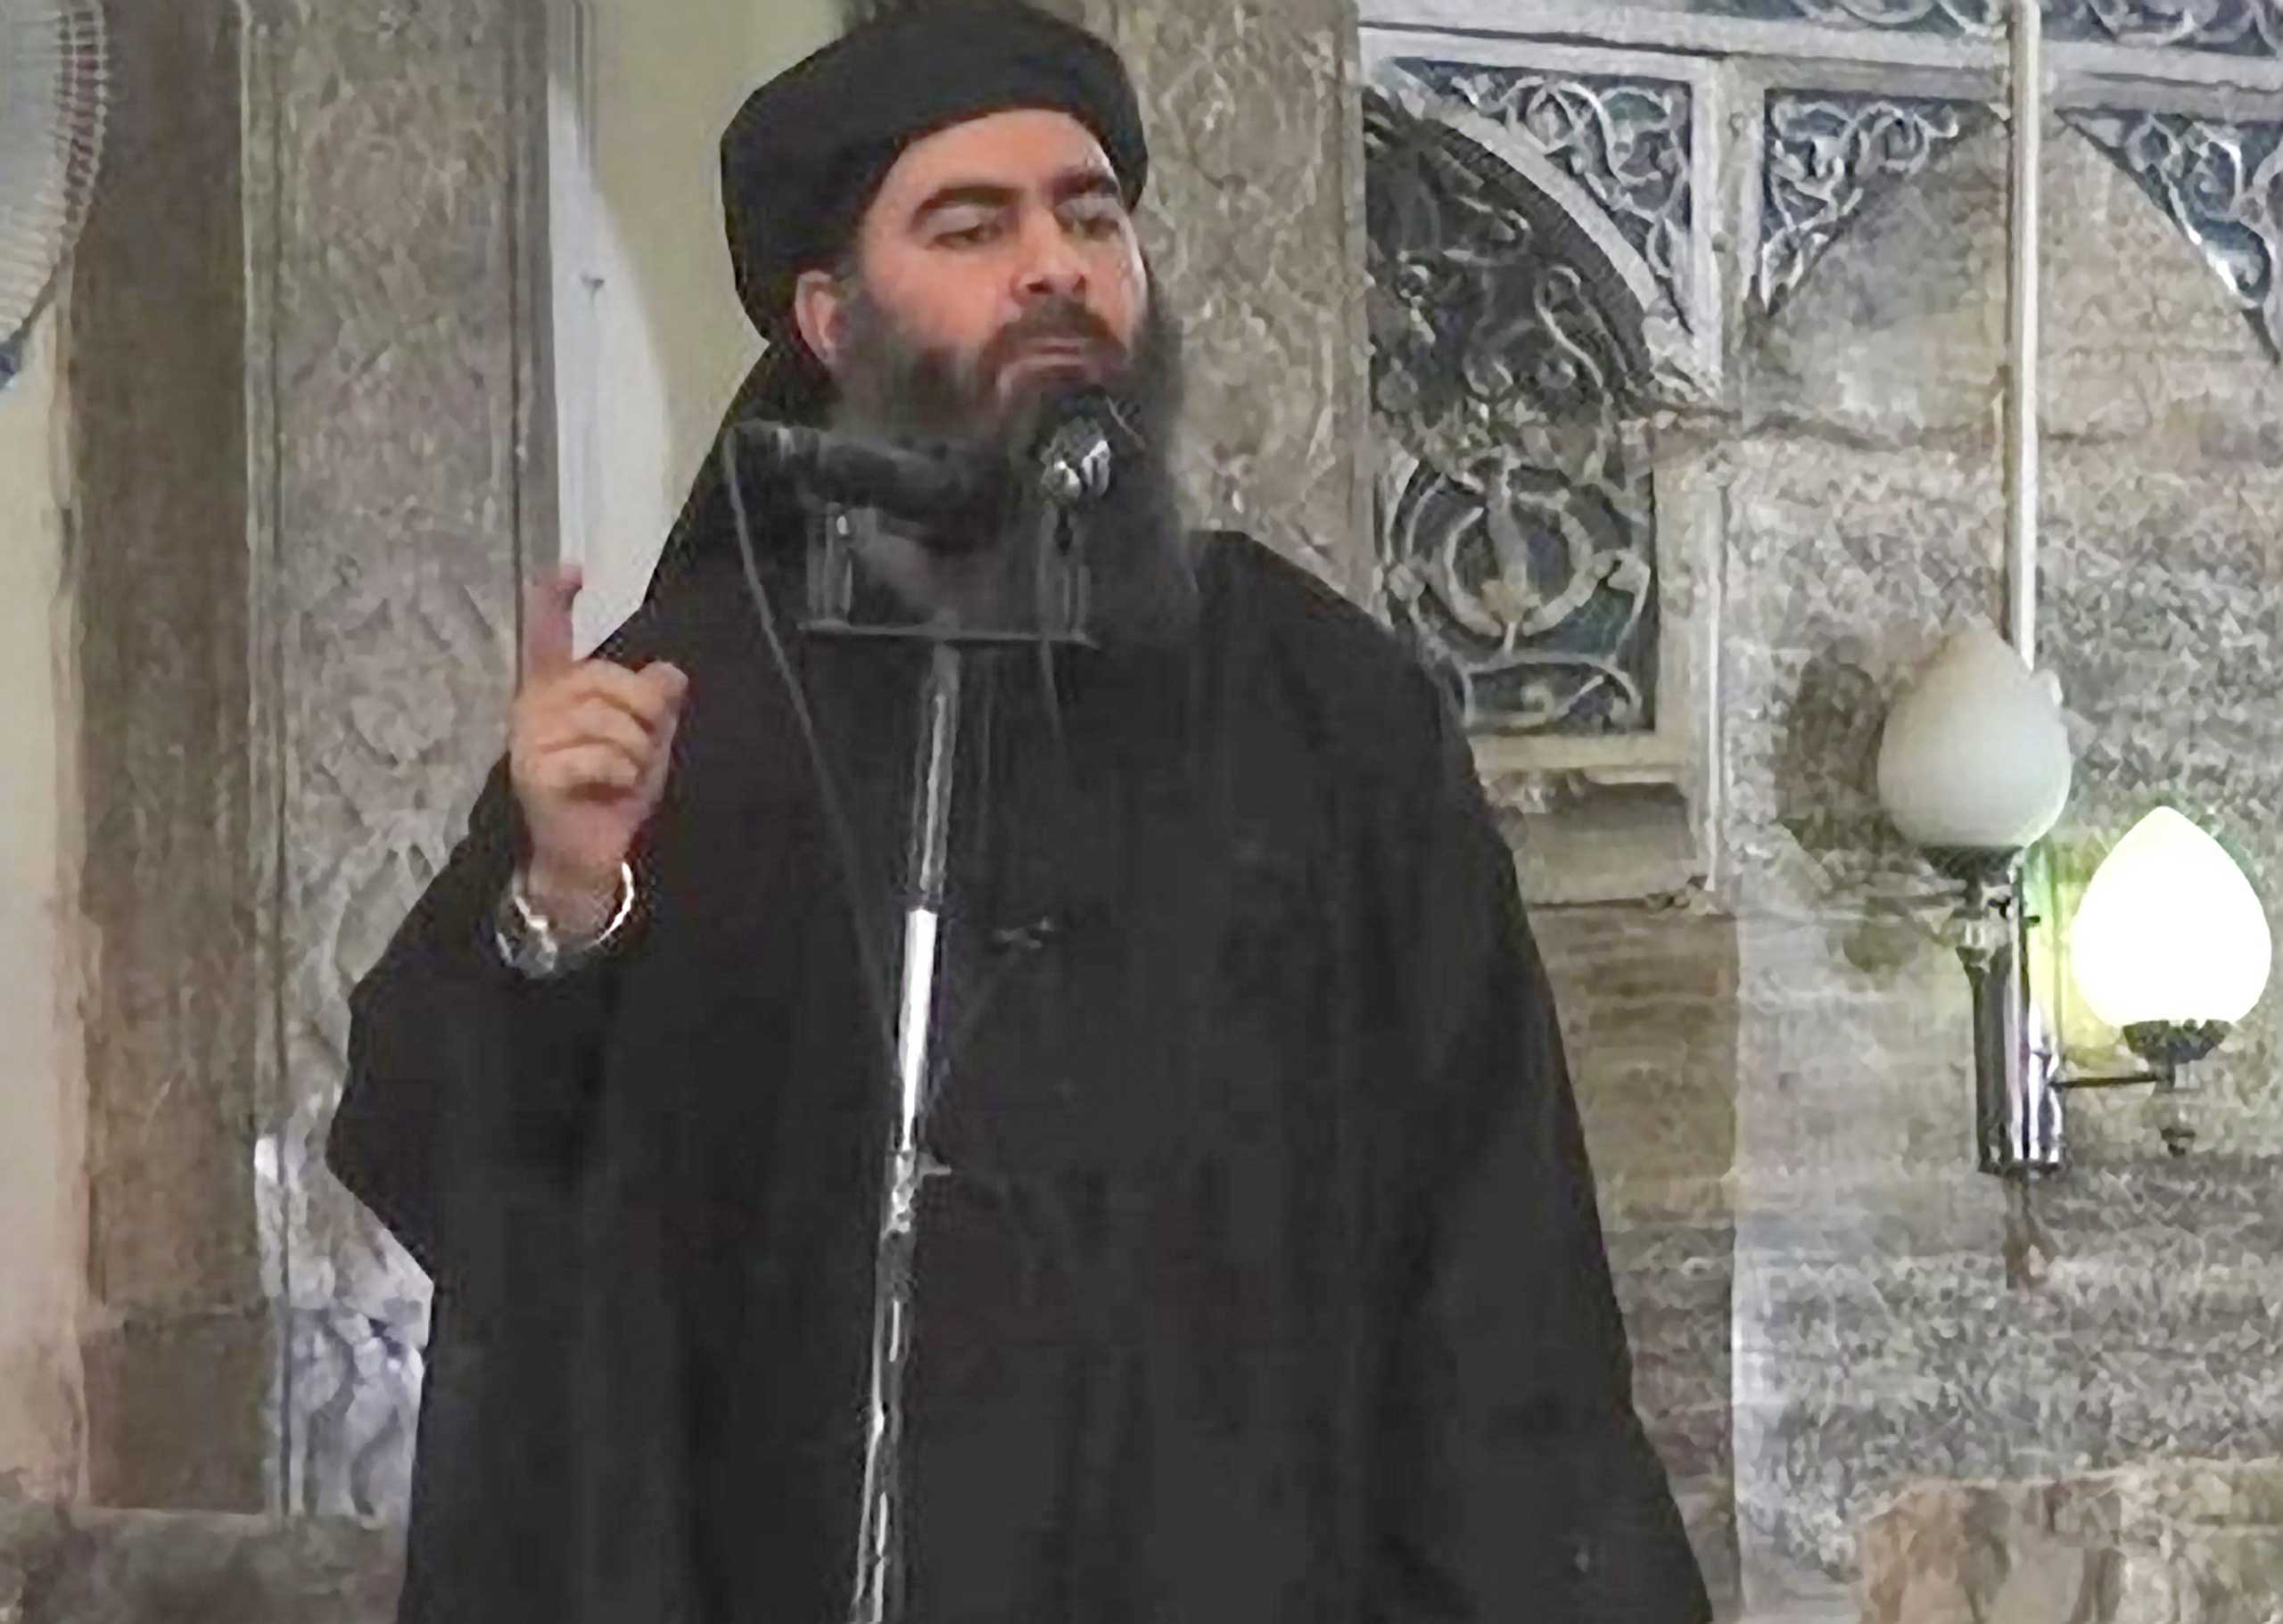 Islamic State leader Abu Bakr al-Baghdadi